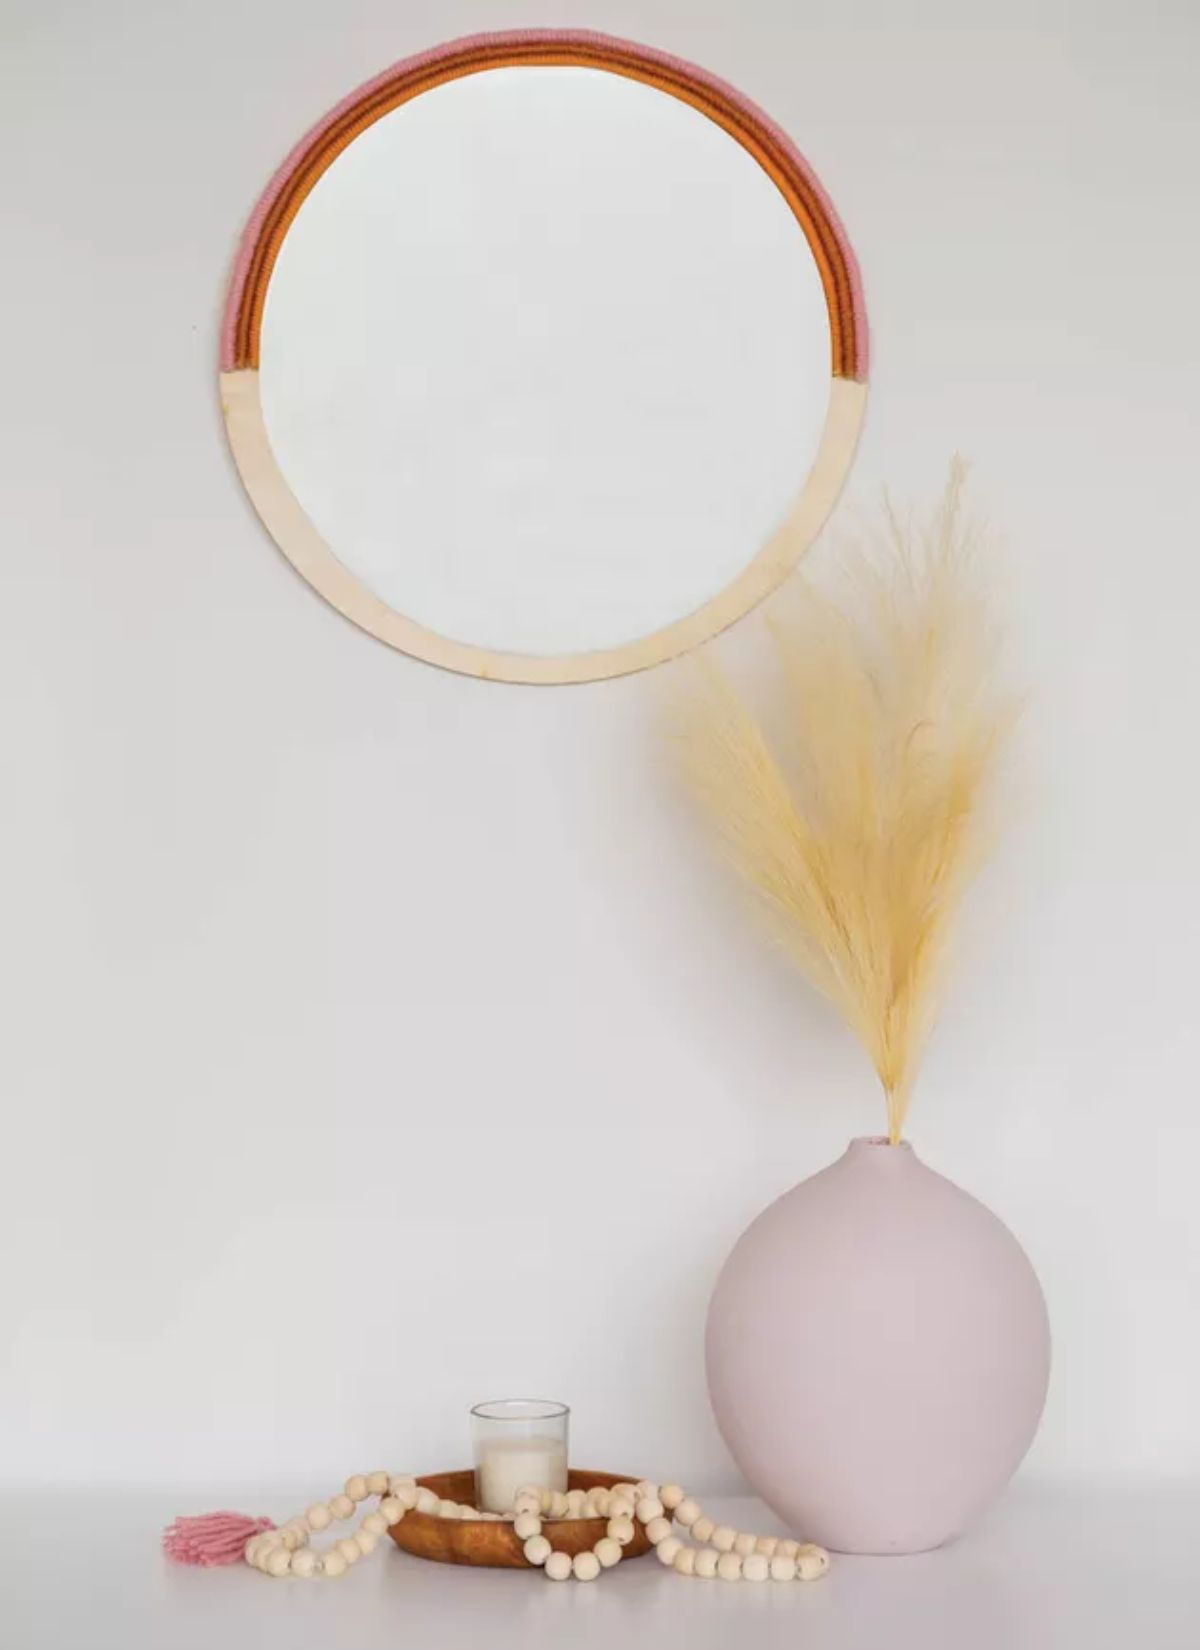 Boho Mirror Featuring Wood and Yarn